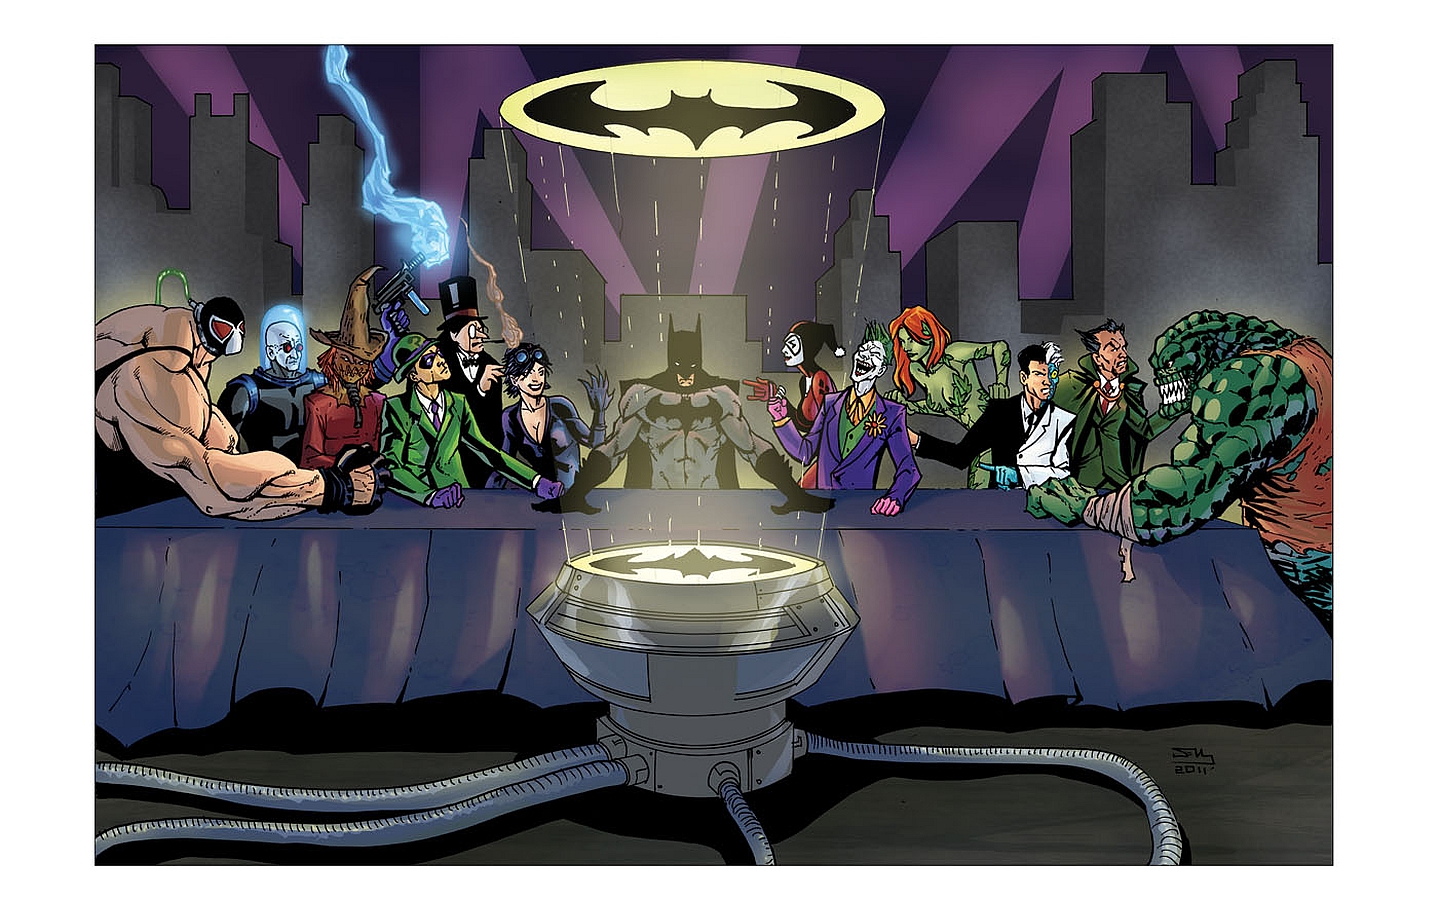 Free HD comics, batman, bane (dc comics), bat signal, harley quinn, joker, killer croc, mr freeze (dc comics), penguin (dc comics), poison ivy, riddler (dc comics), scarecrow (batman), two face